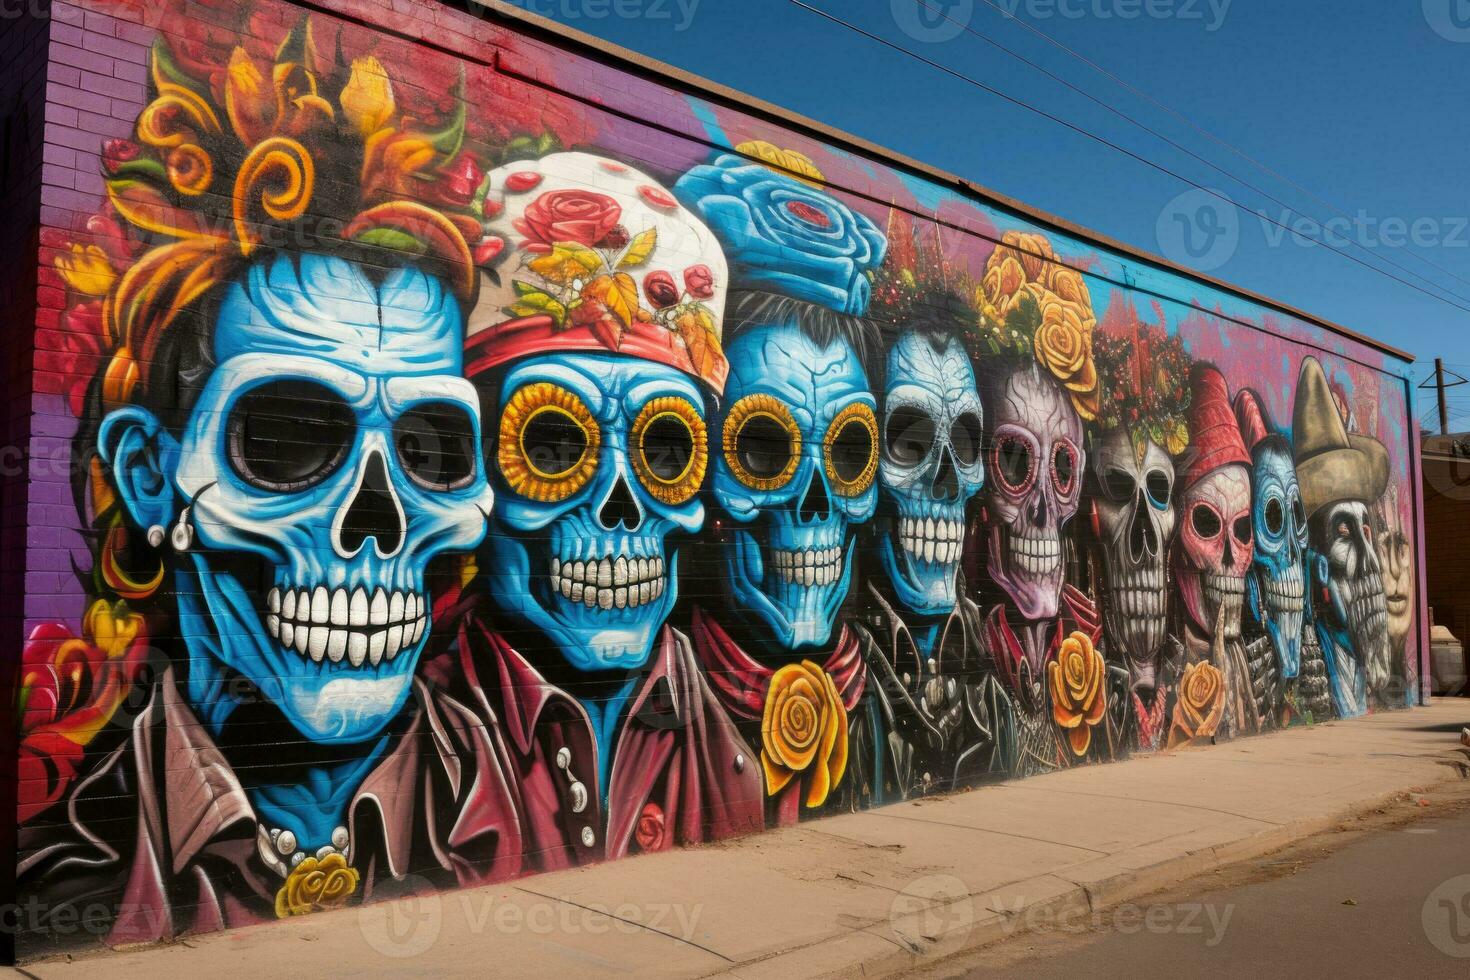 gata mural skildrar livlig skelett- siffror mitt i dag av de död- fester foto